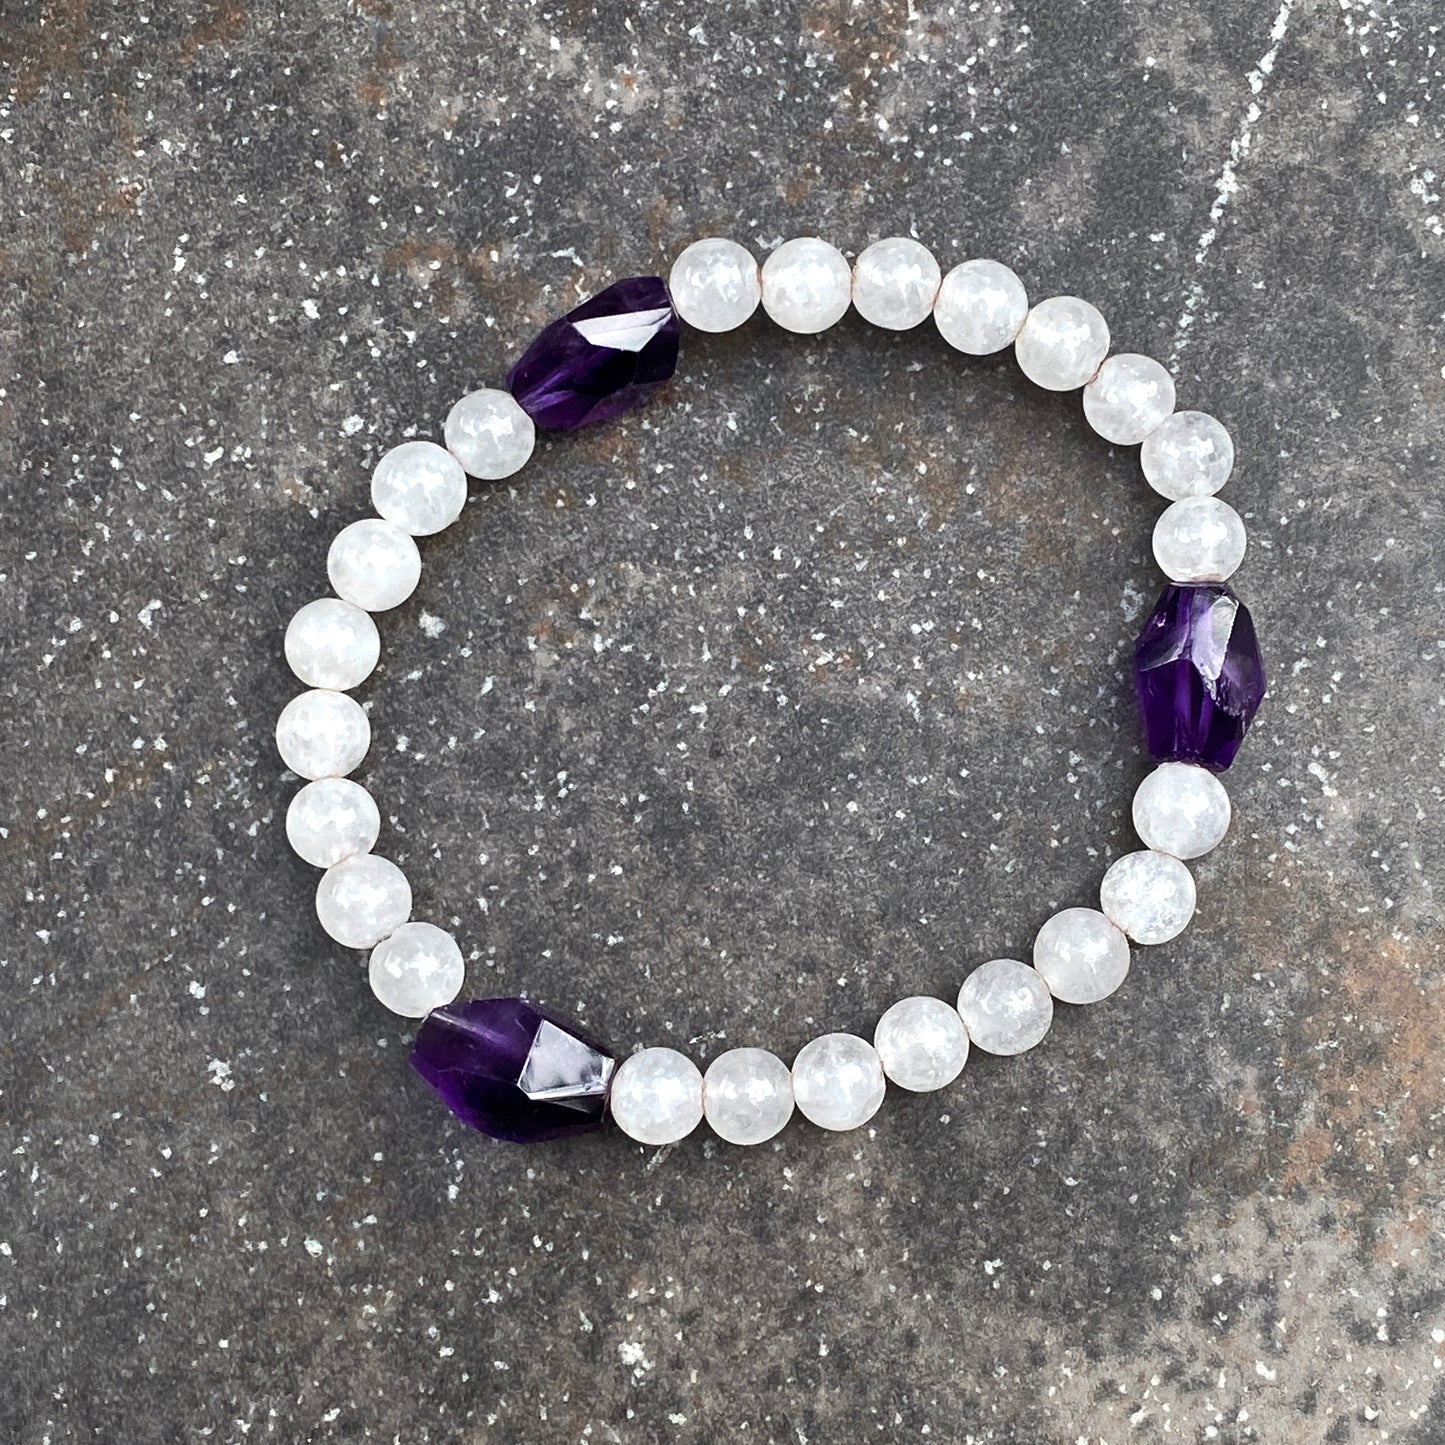 Women's Three Purple Gemstone "LOVE" bracelet stack made of white Jade, Amethyst, clear Quartz